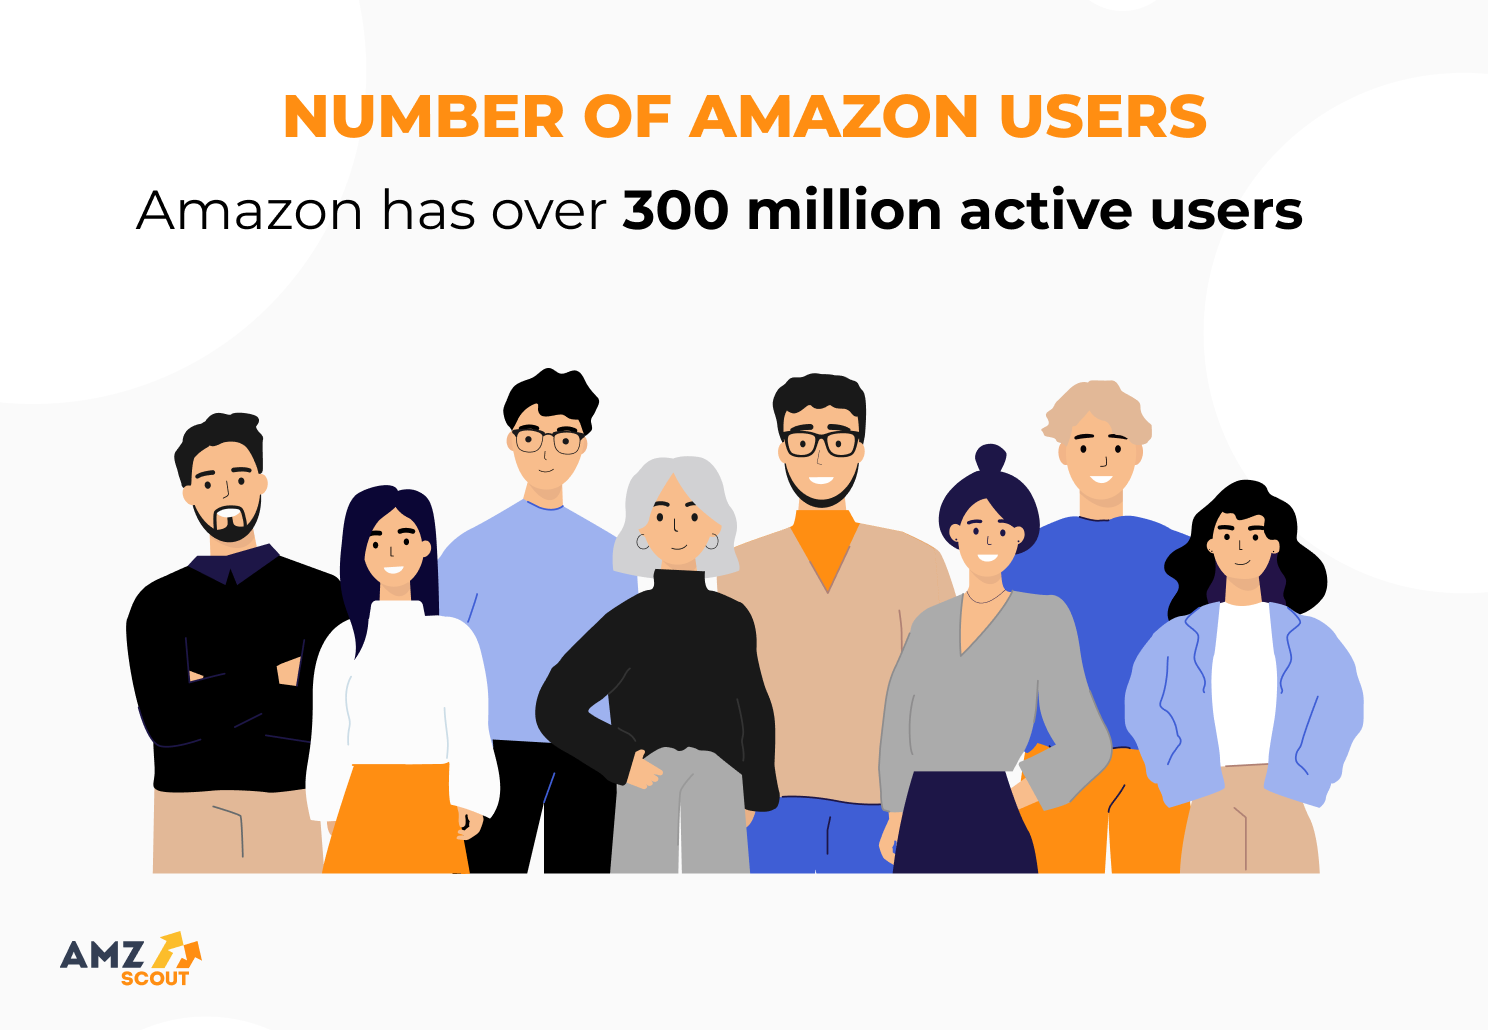 Amazon has over 300 million users according to statistics